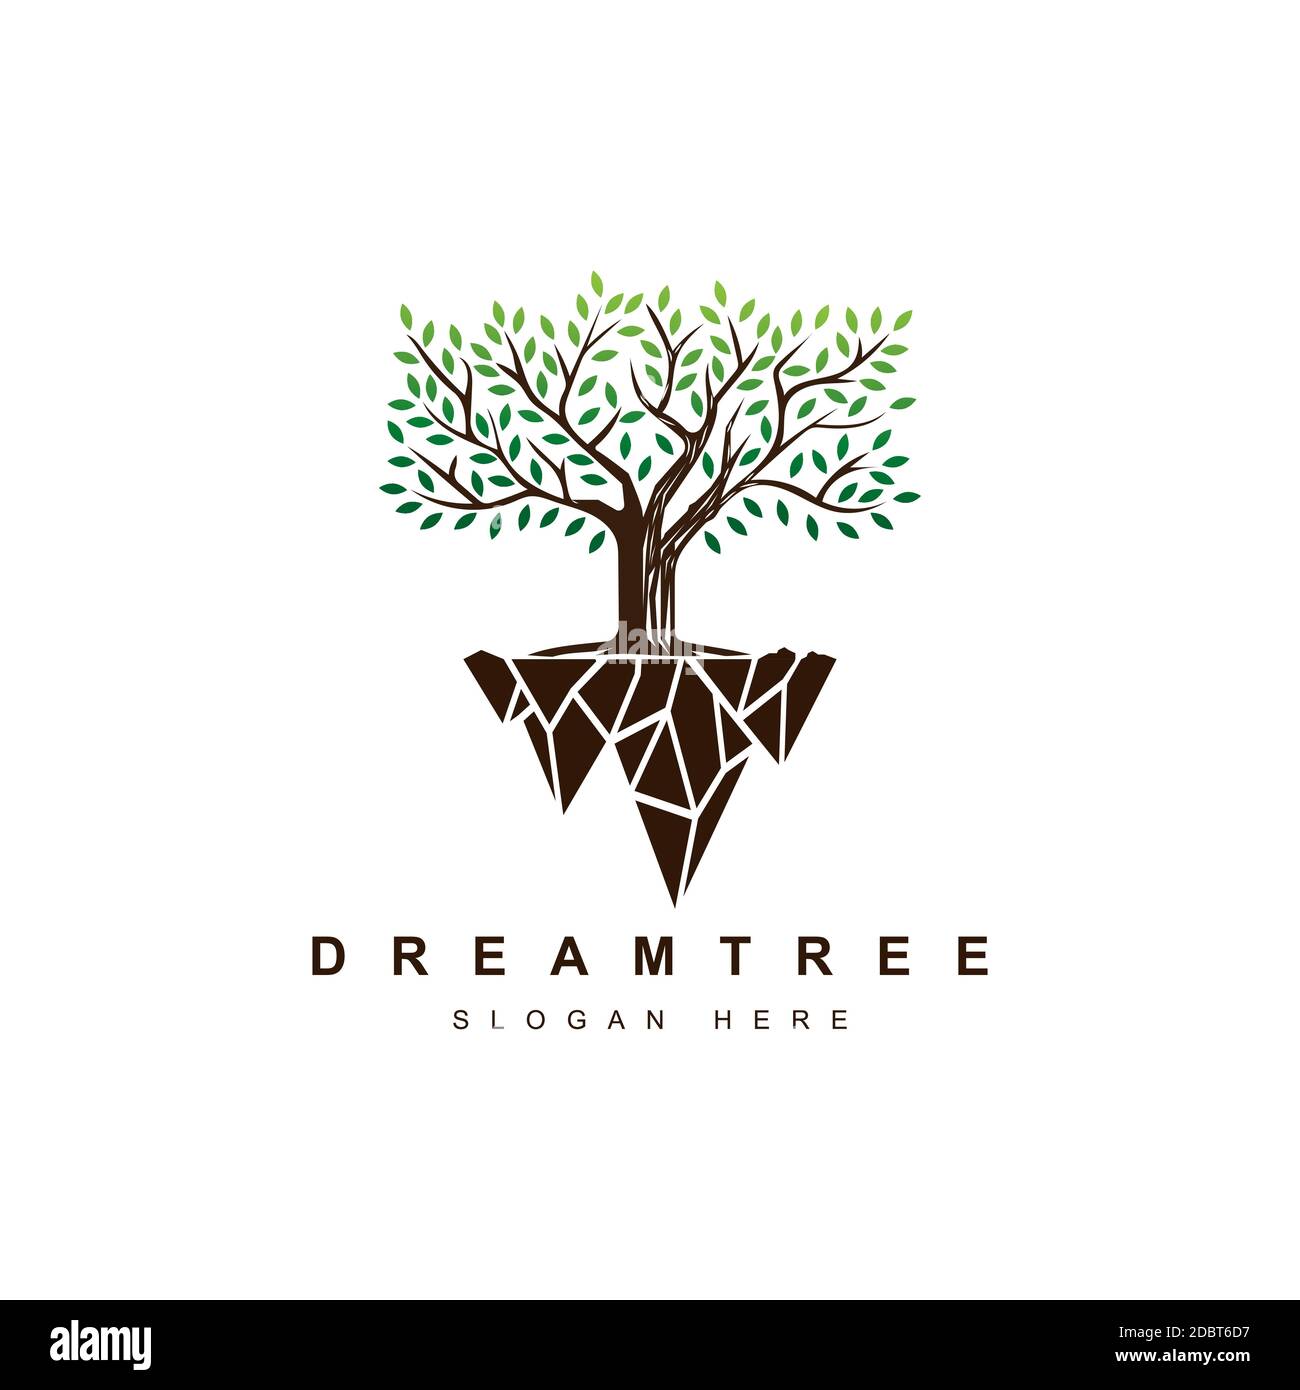 Dream tree logo illustration logo design template.Tree on the sky icon Stock Vector